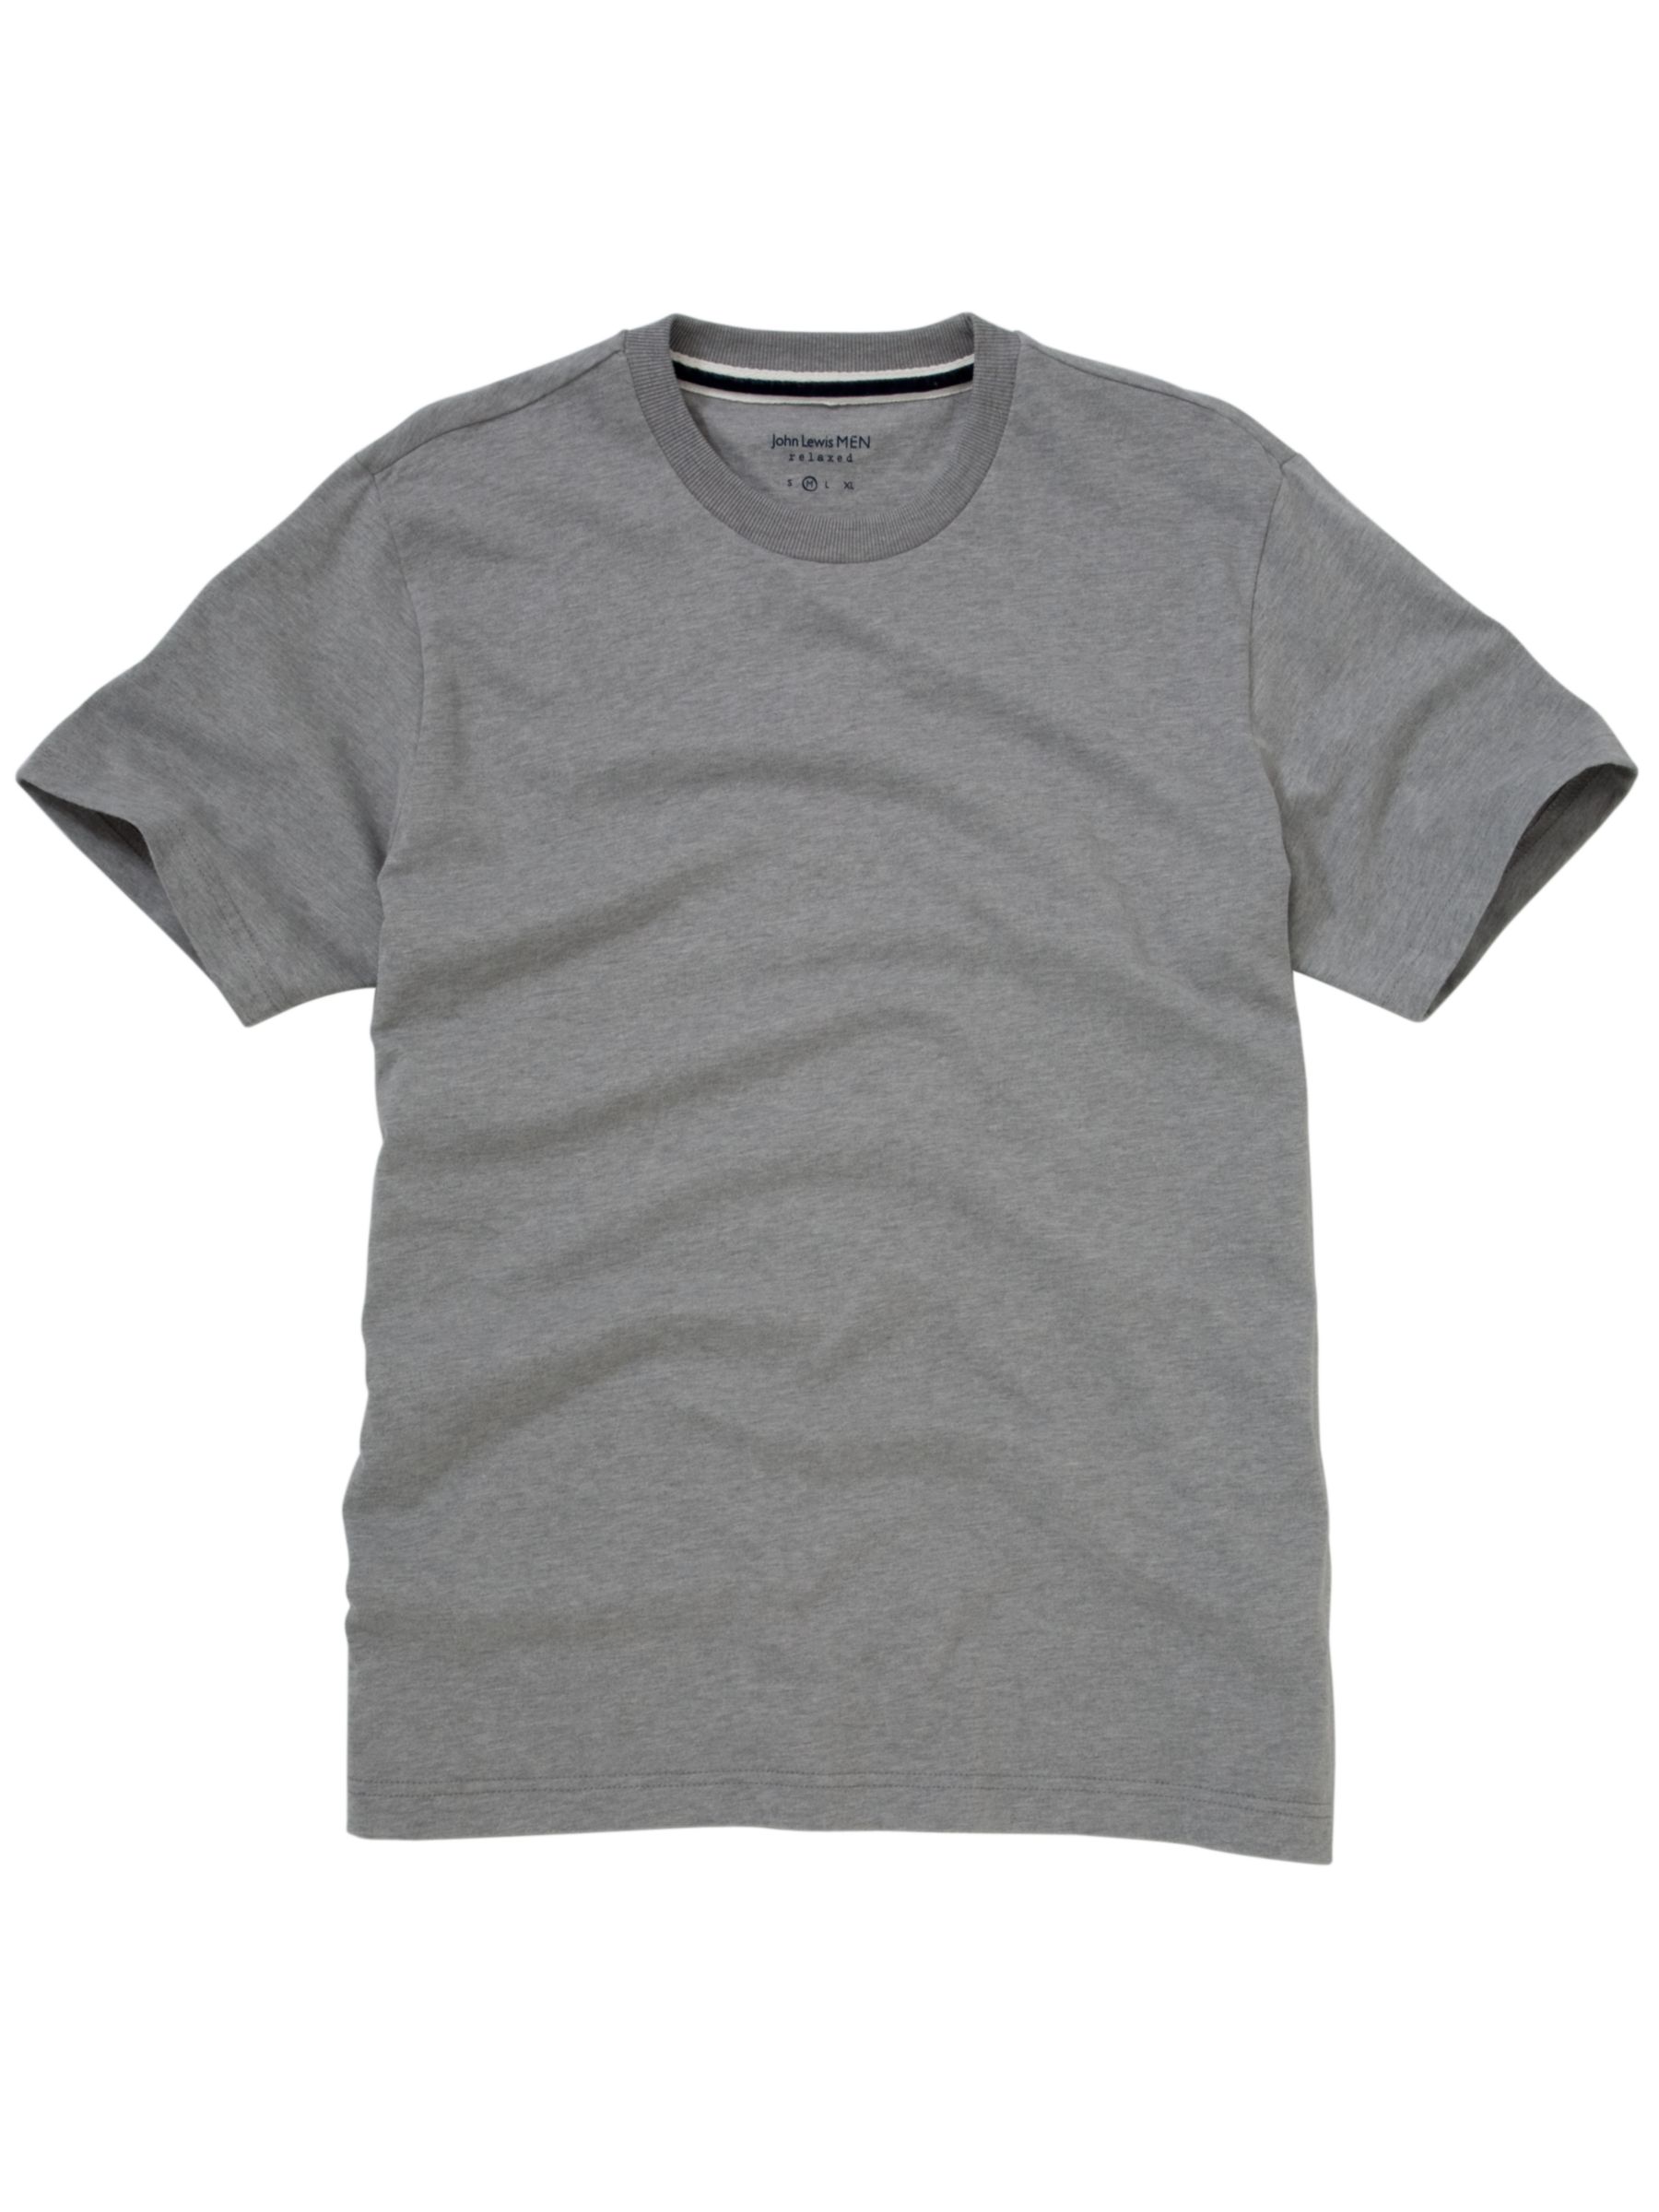 Sueded Cotton Loungewear T-Shirt, Grey